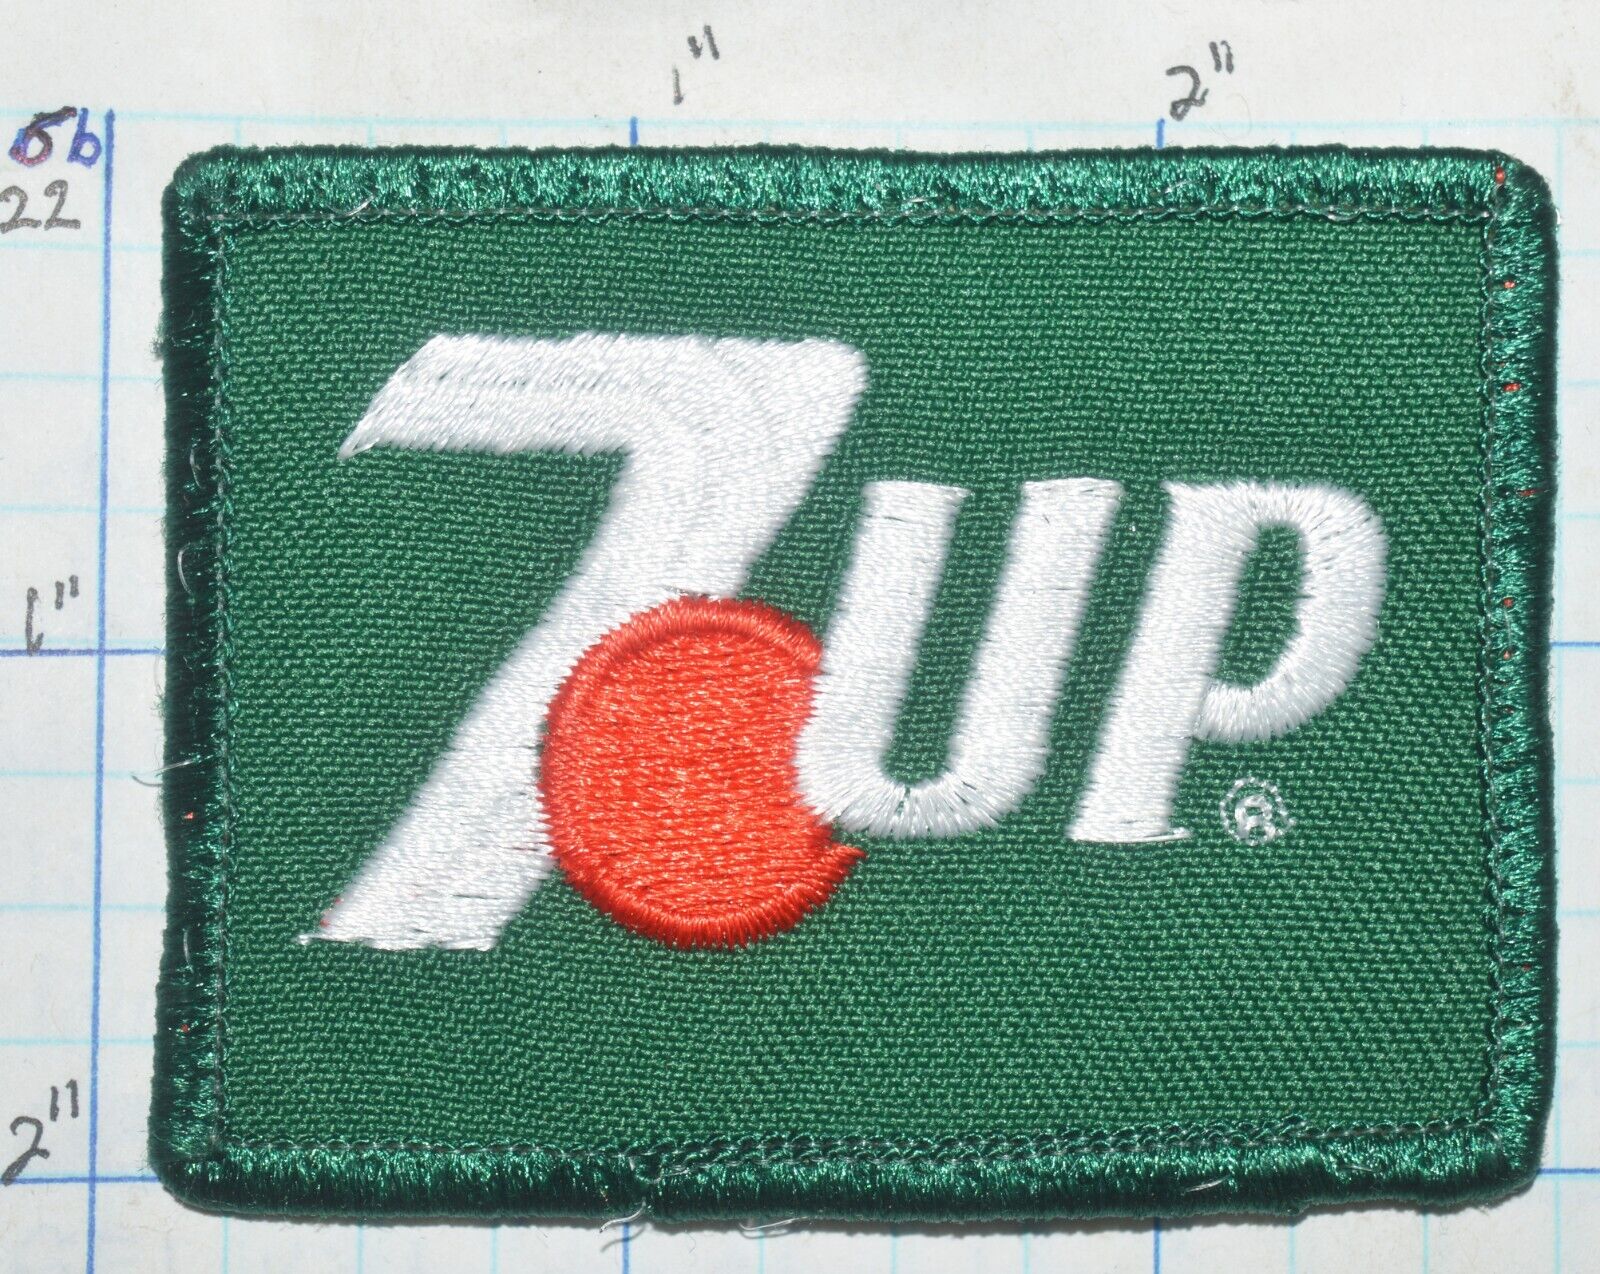 7up 7-up Soda Pop Beverage Advertising Logo Vintage 2" X 2.75" Patch